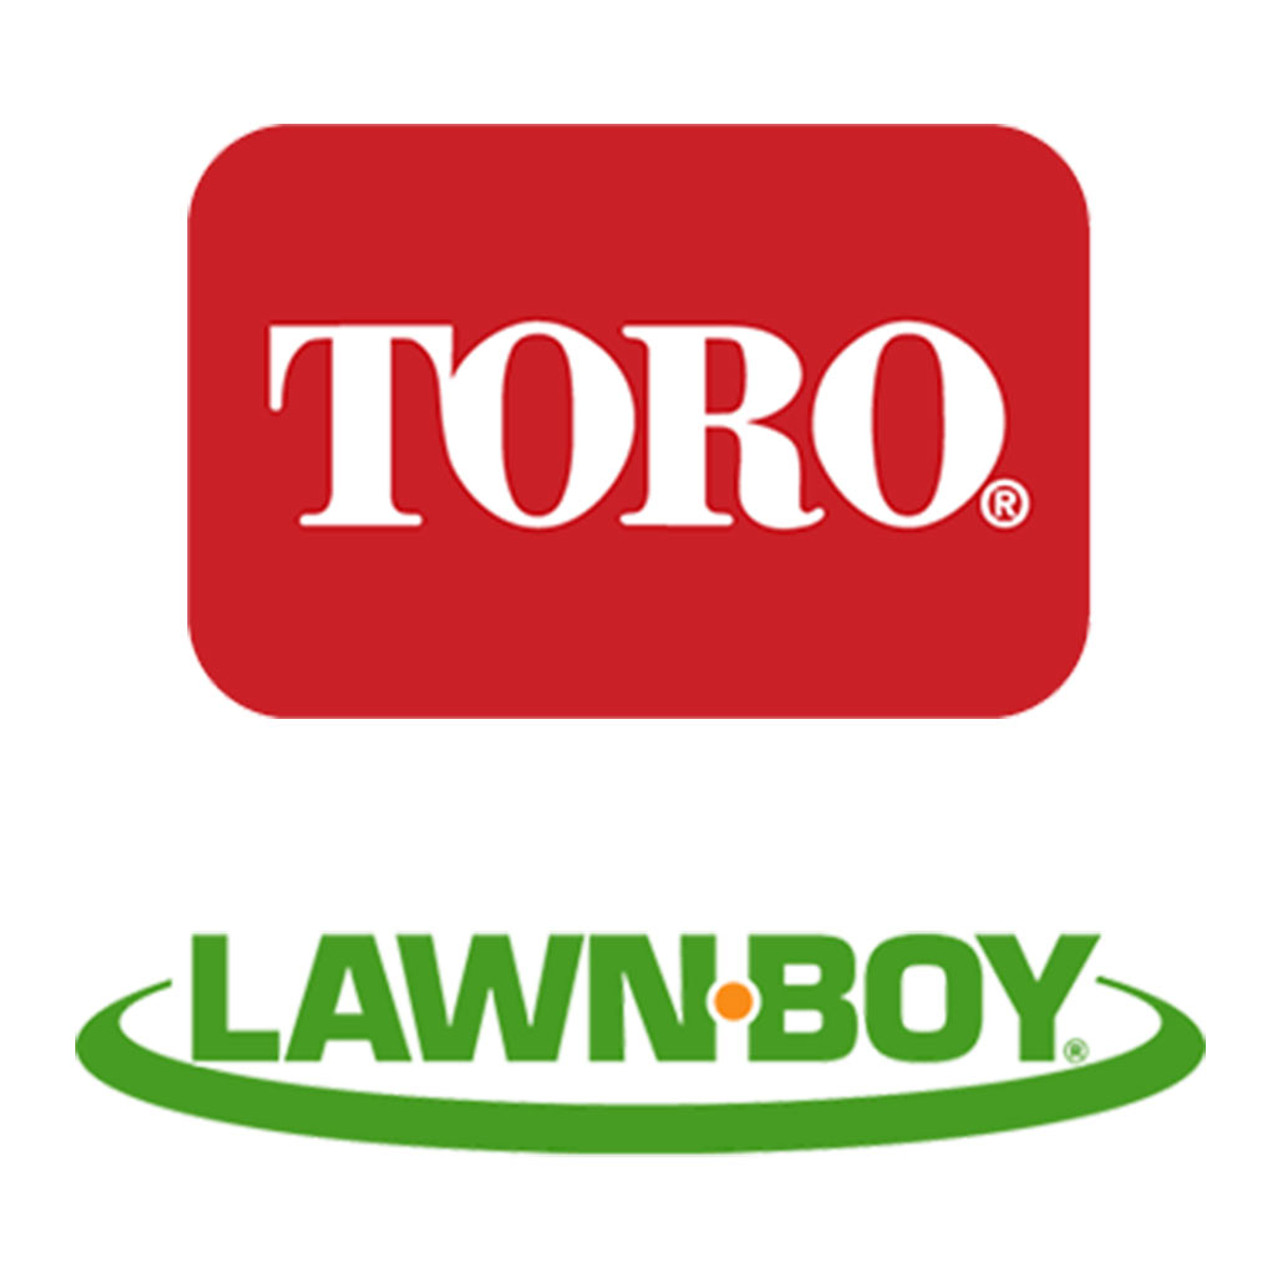 Toro Lawn-Boy 361-11 New Red _ Gallon